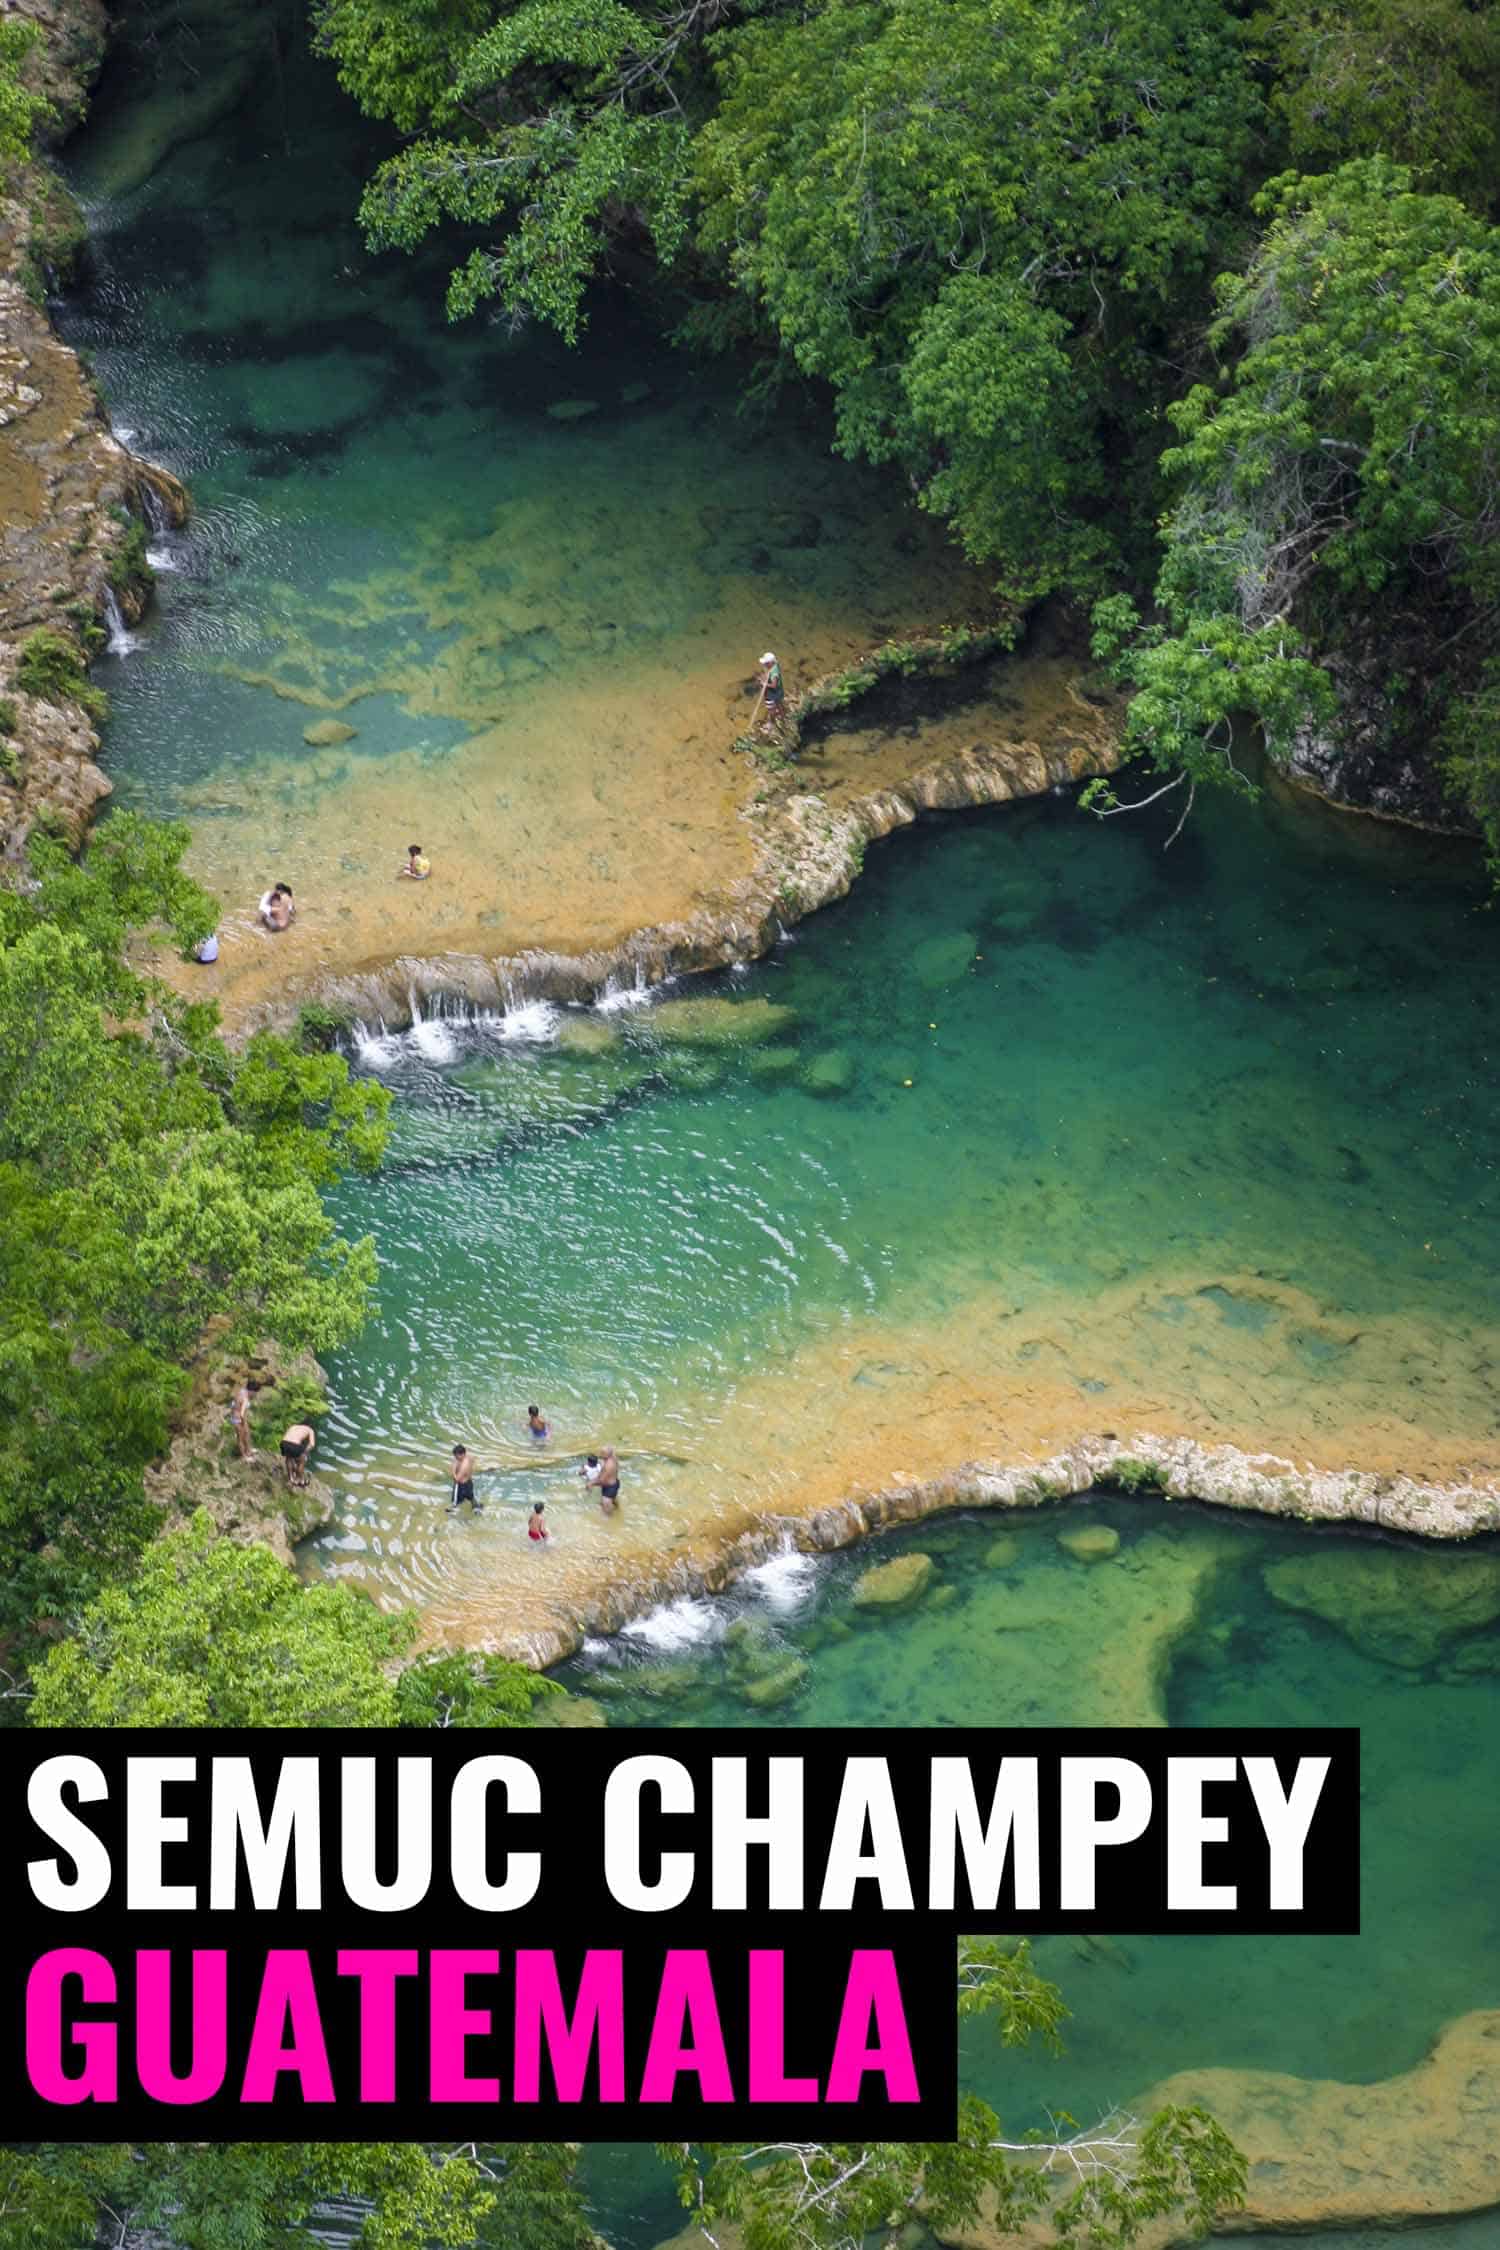 Semuc Champey in Guatemala